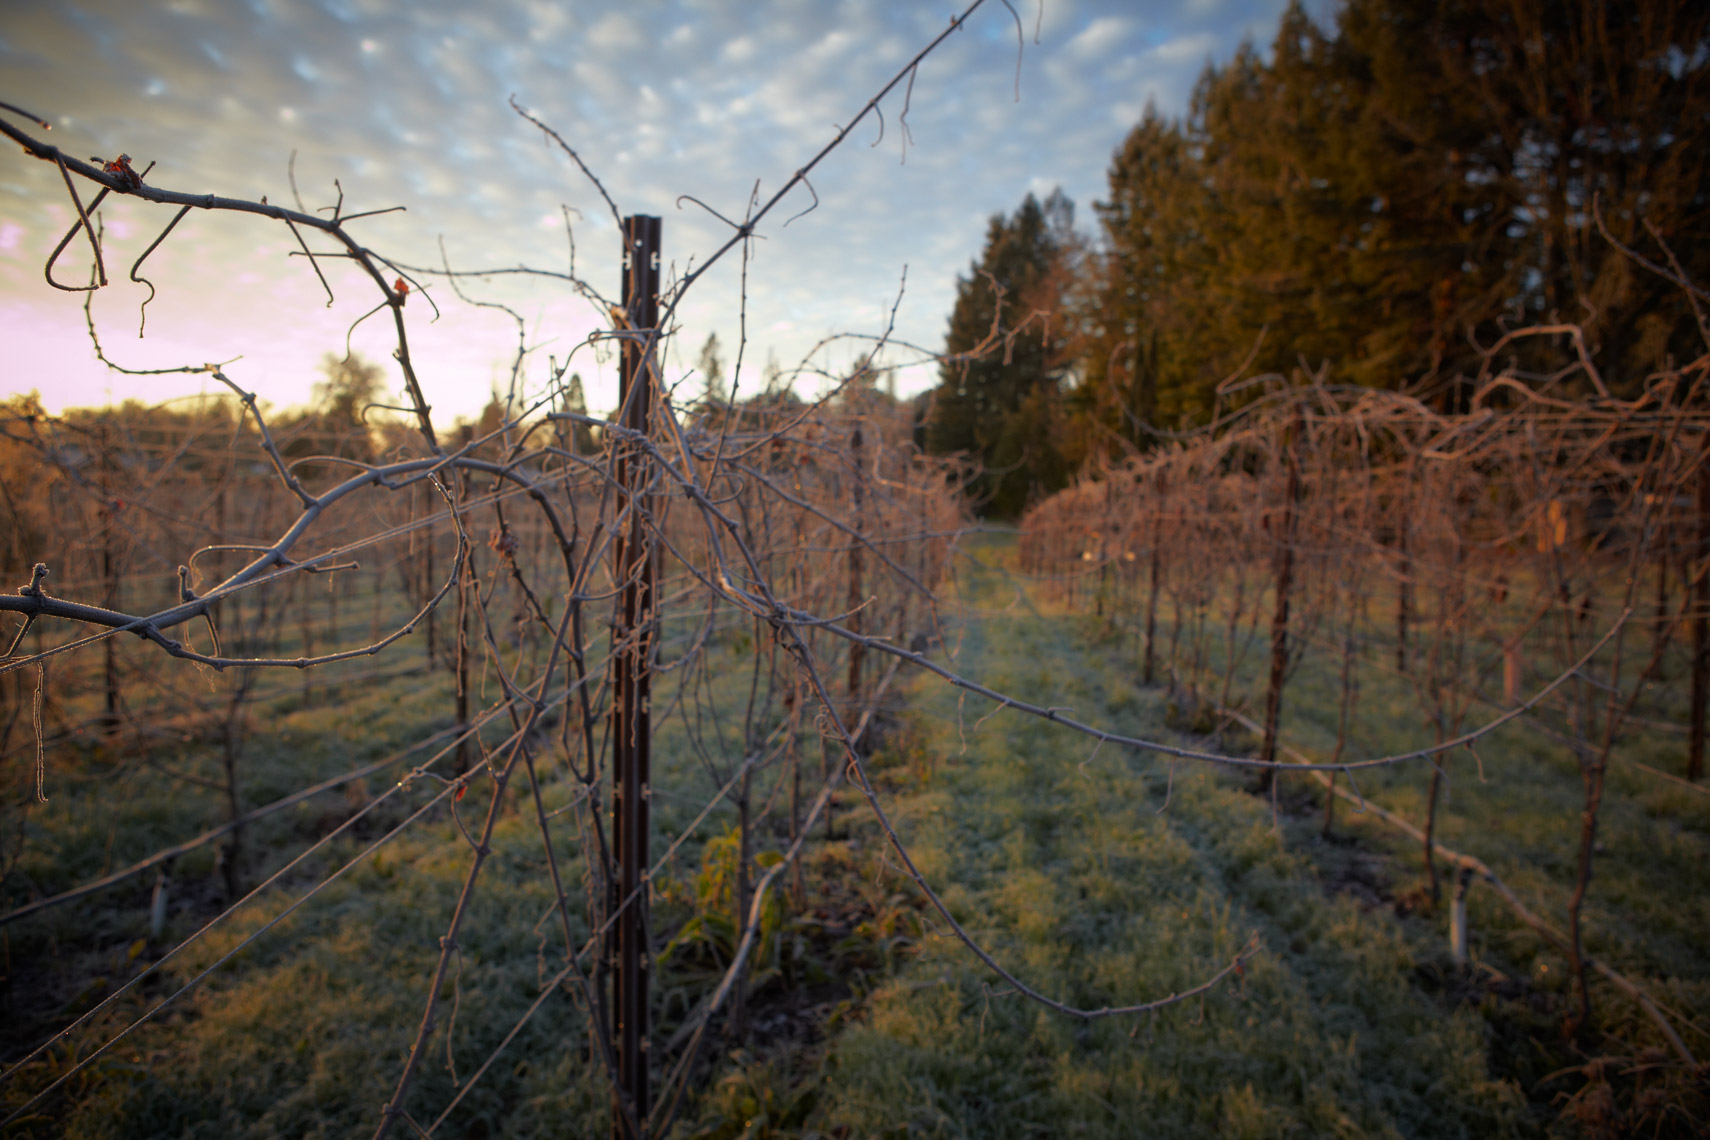 AlanCampbellPhotography,BigPig Vineyard Winter frost